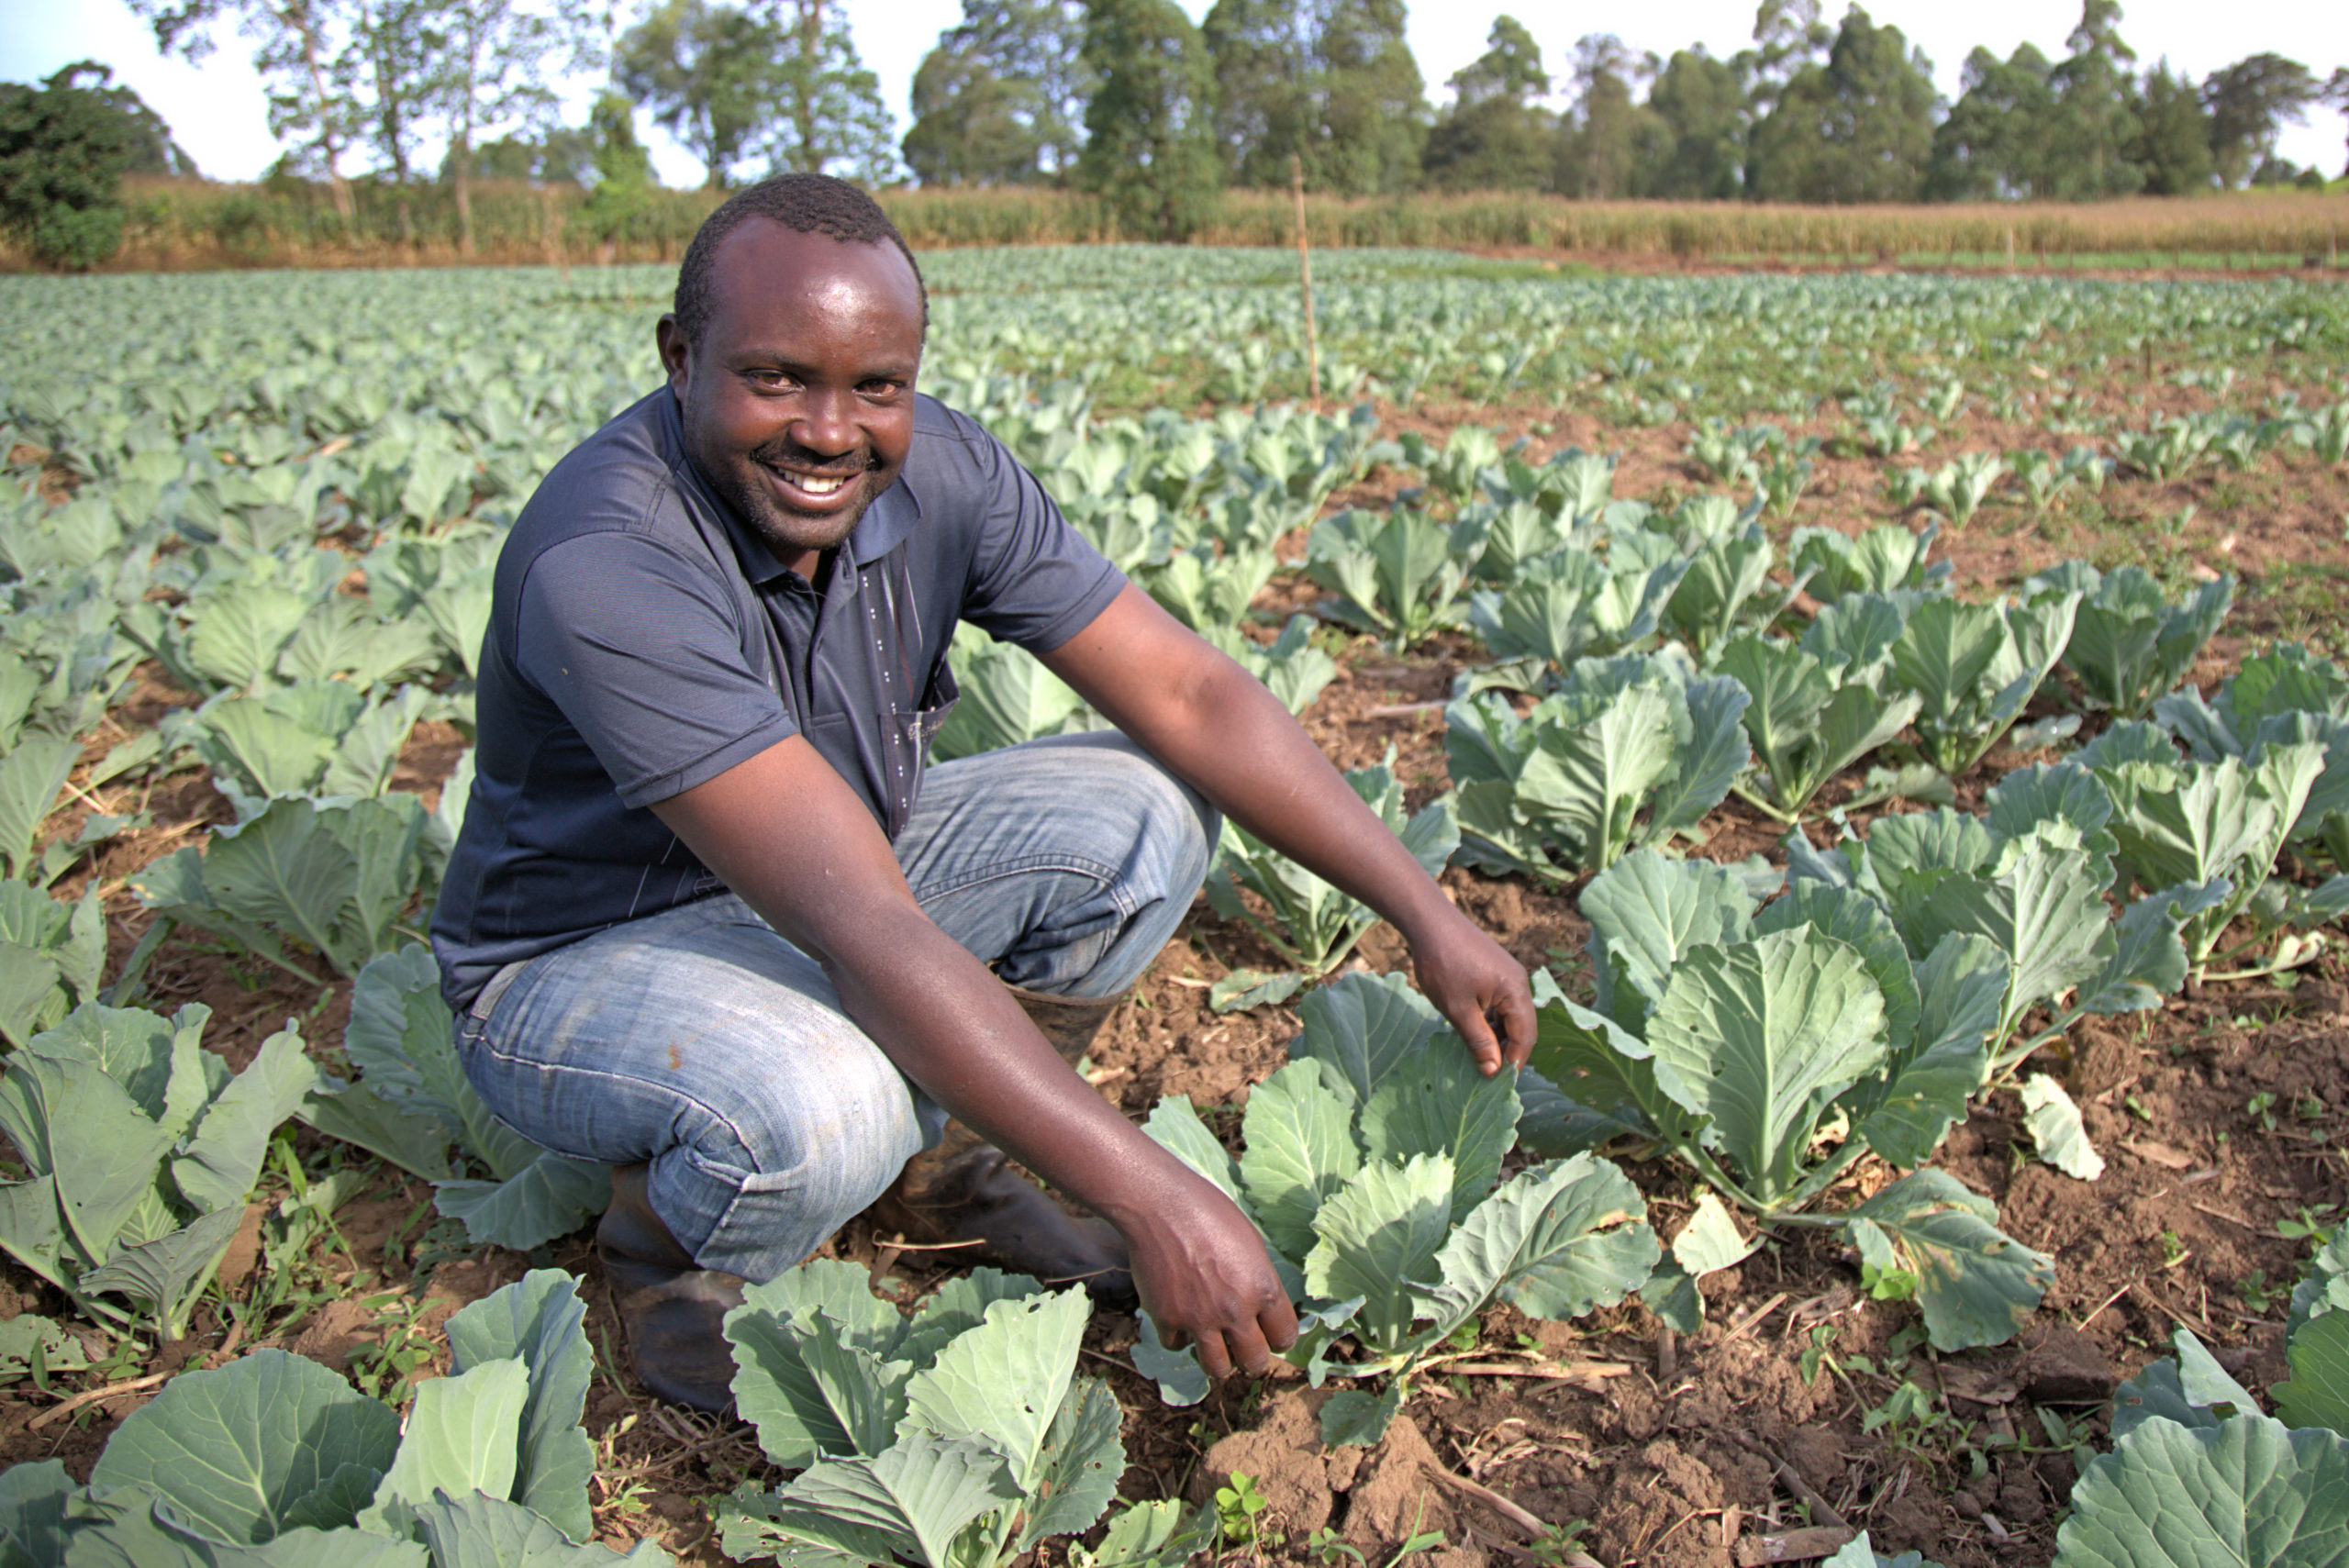 Joseph with his cabbages in Kitale, Kenya (Farm Africa/Tara Carey)